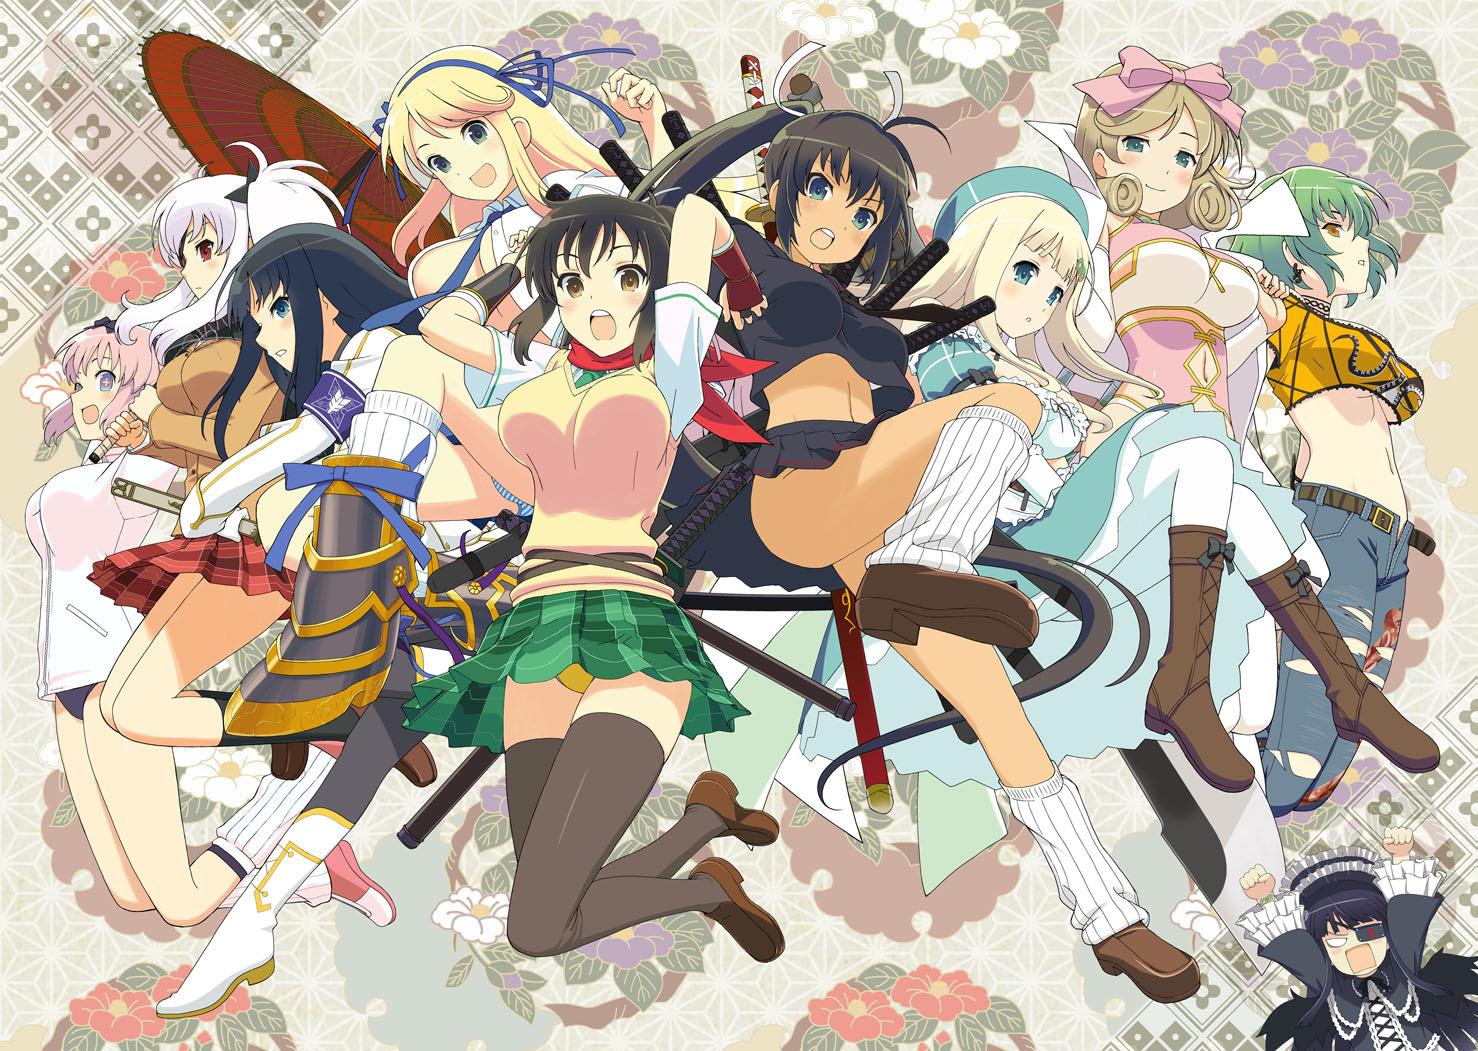 HD wallpaper, Senran Kagura, Anime, Group Of Women, Looking Below